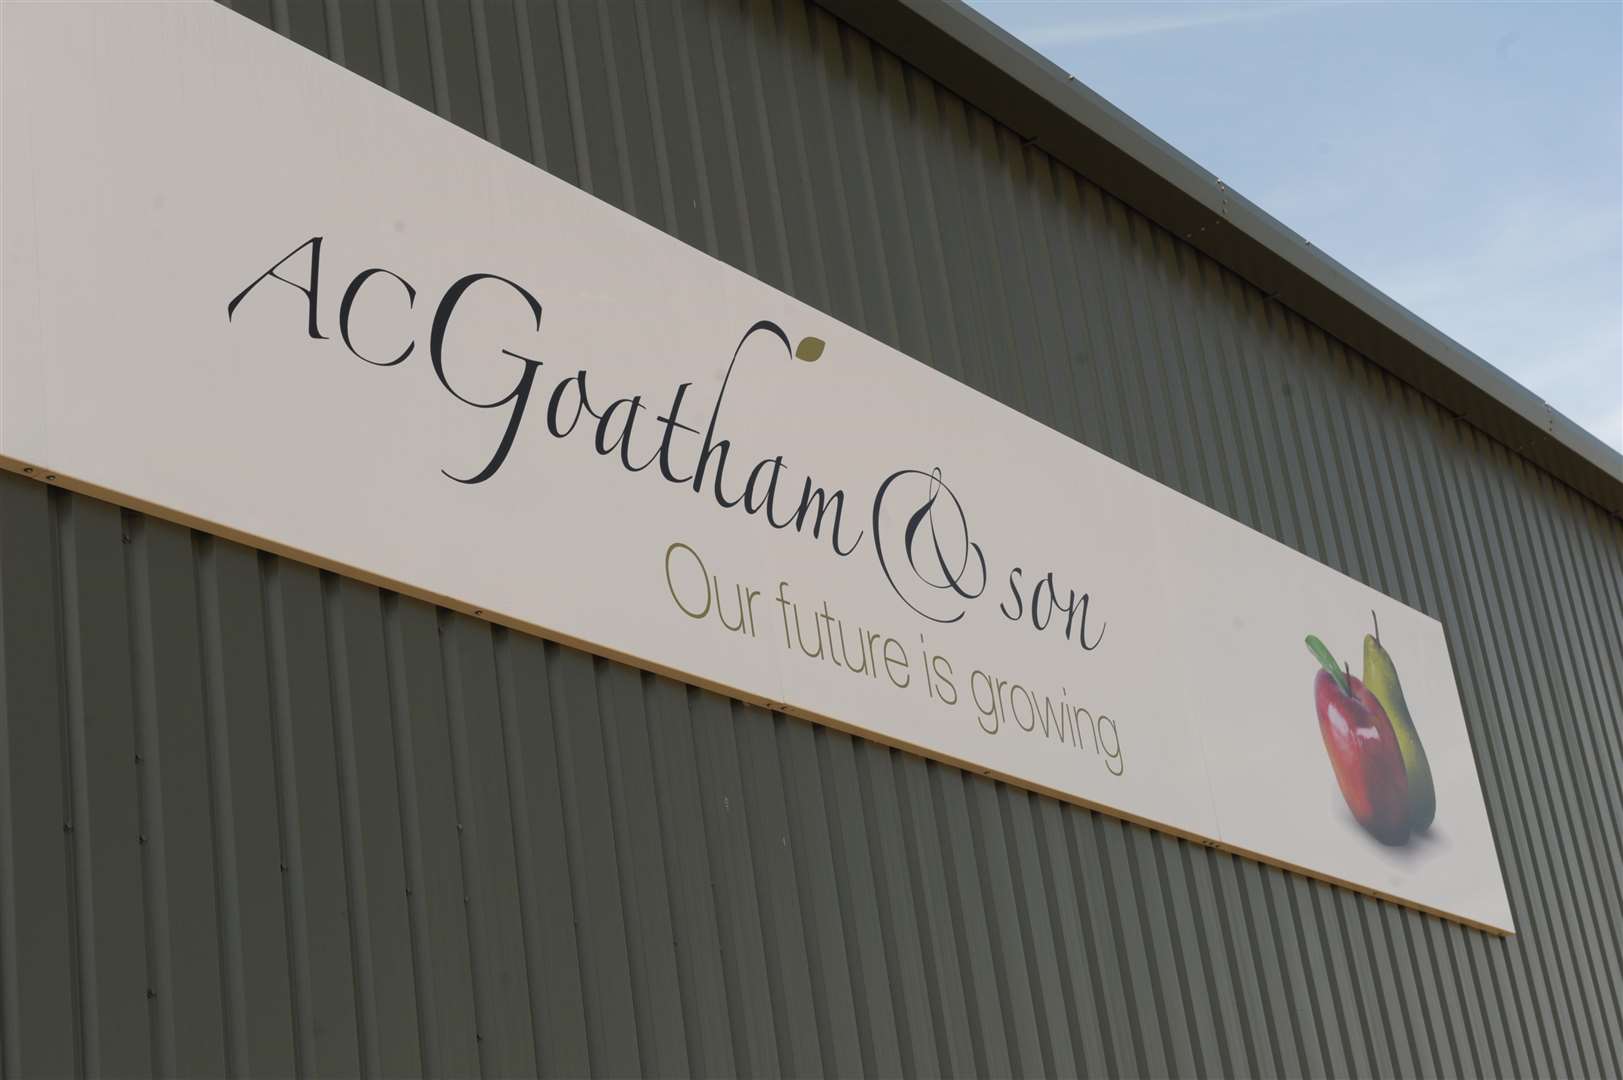 AC Goatham's headquarters at Flanders Farm in Hoo. Picture: Steve Crispe